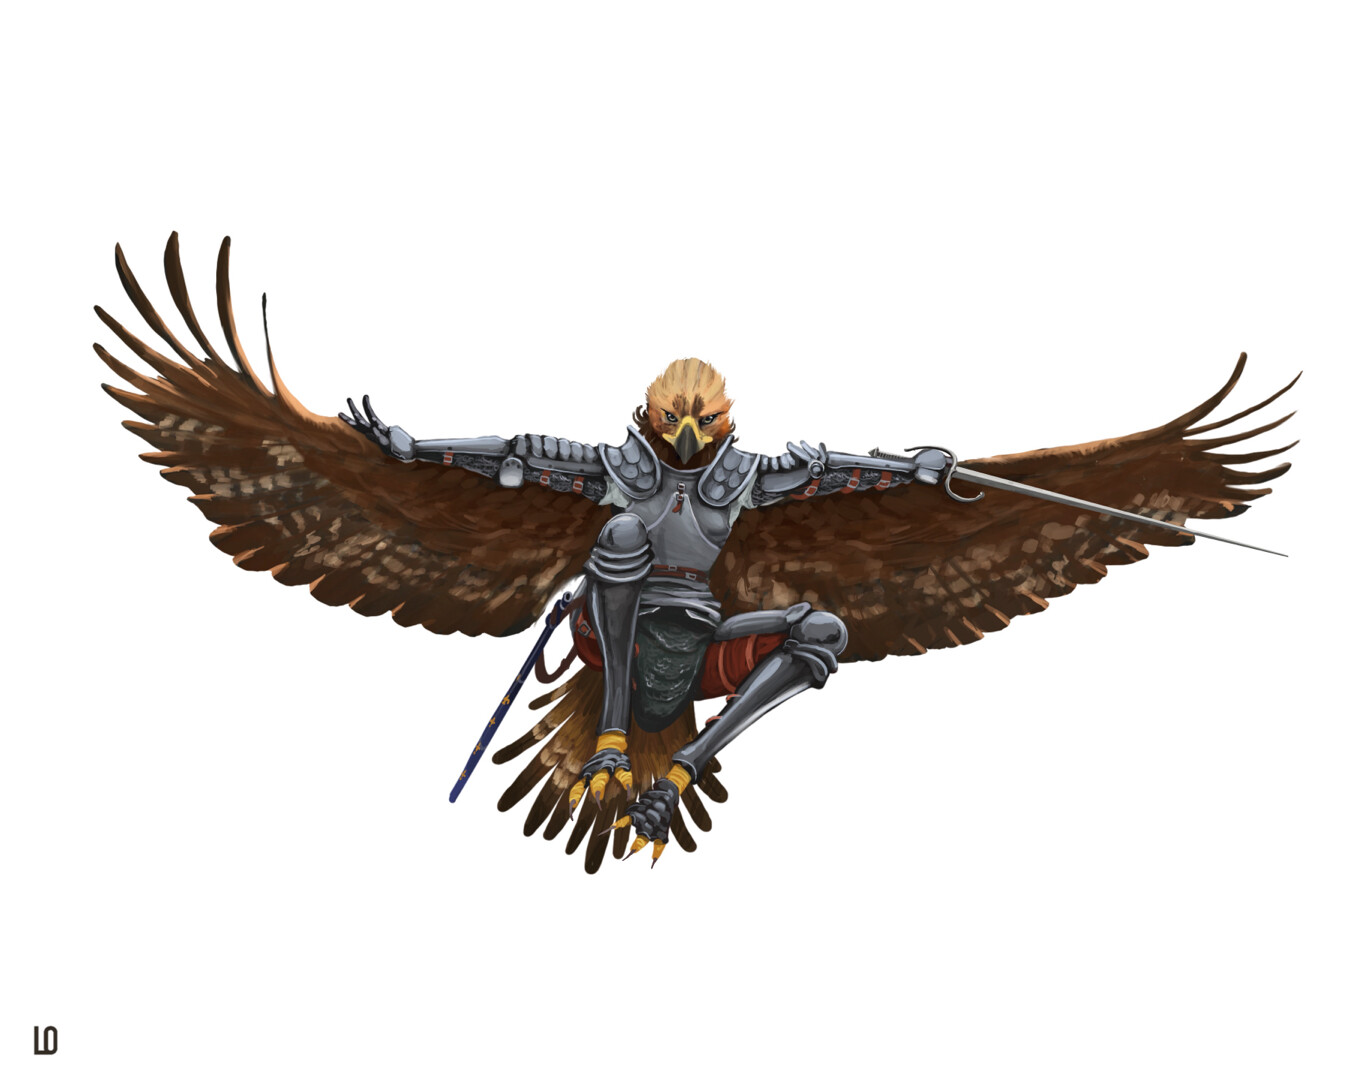 Jean the Golden Eagle